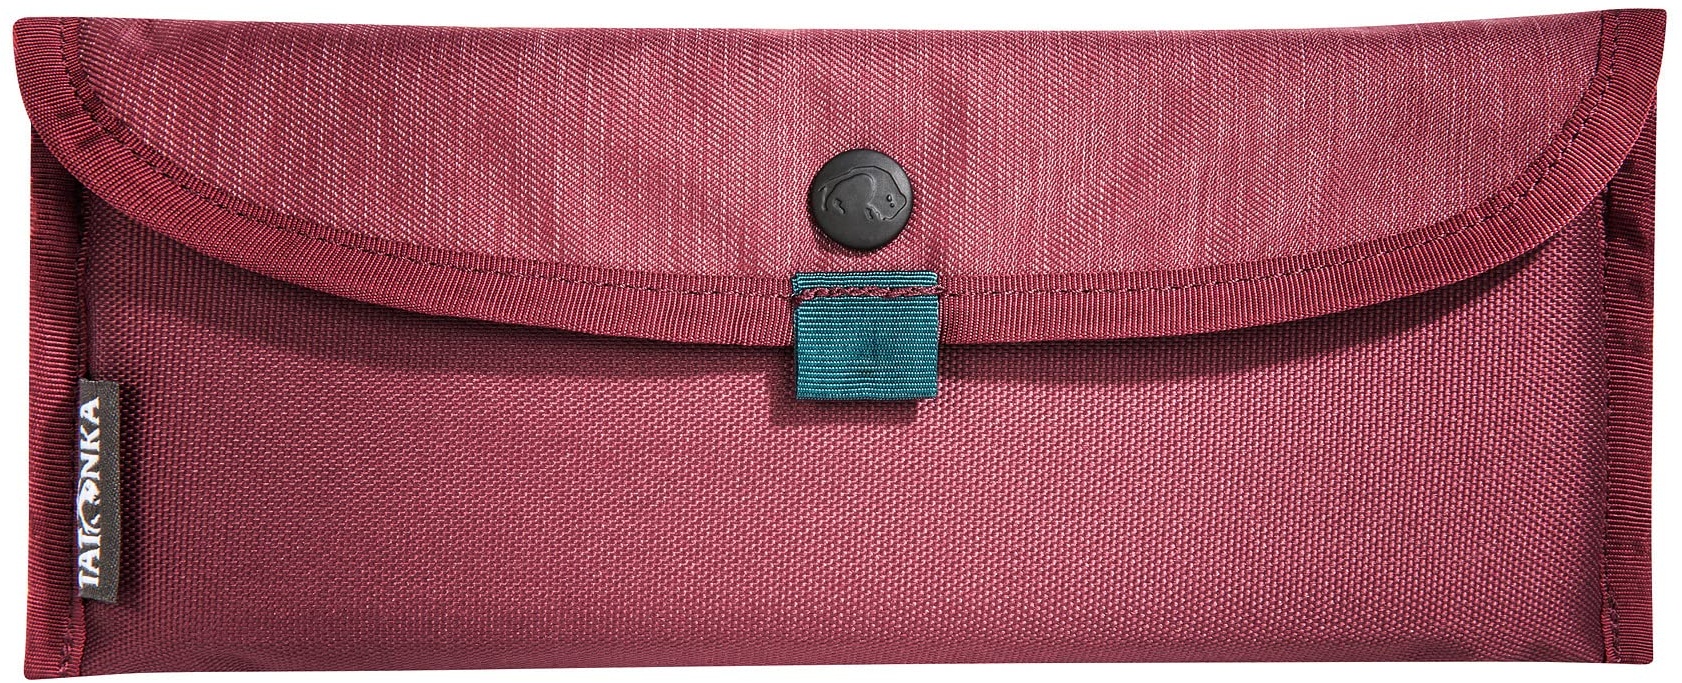 Tatonka Bestecktasche - Aufbewahrungtasche für Camping-Besteck -25 x 10 cm - bordeaux red